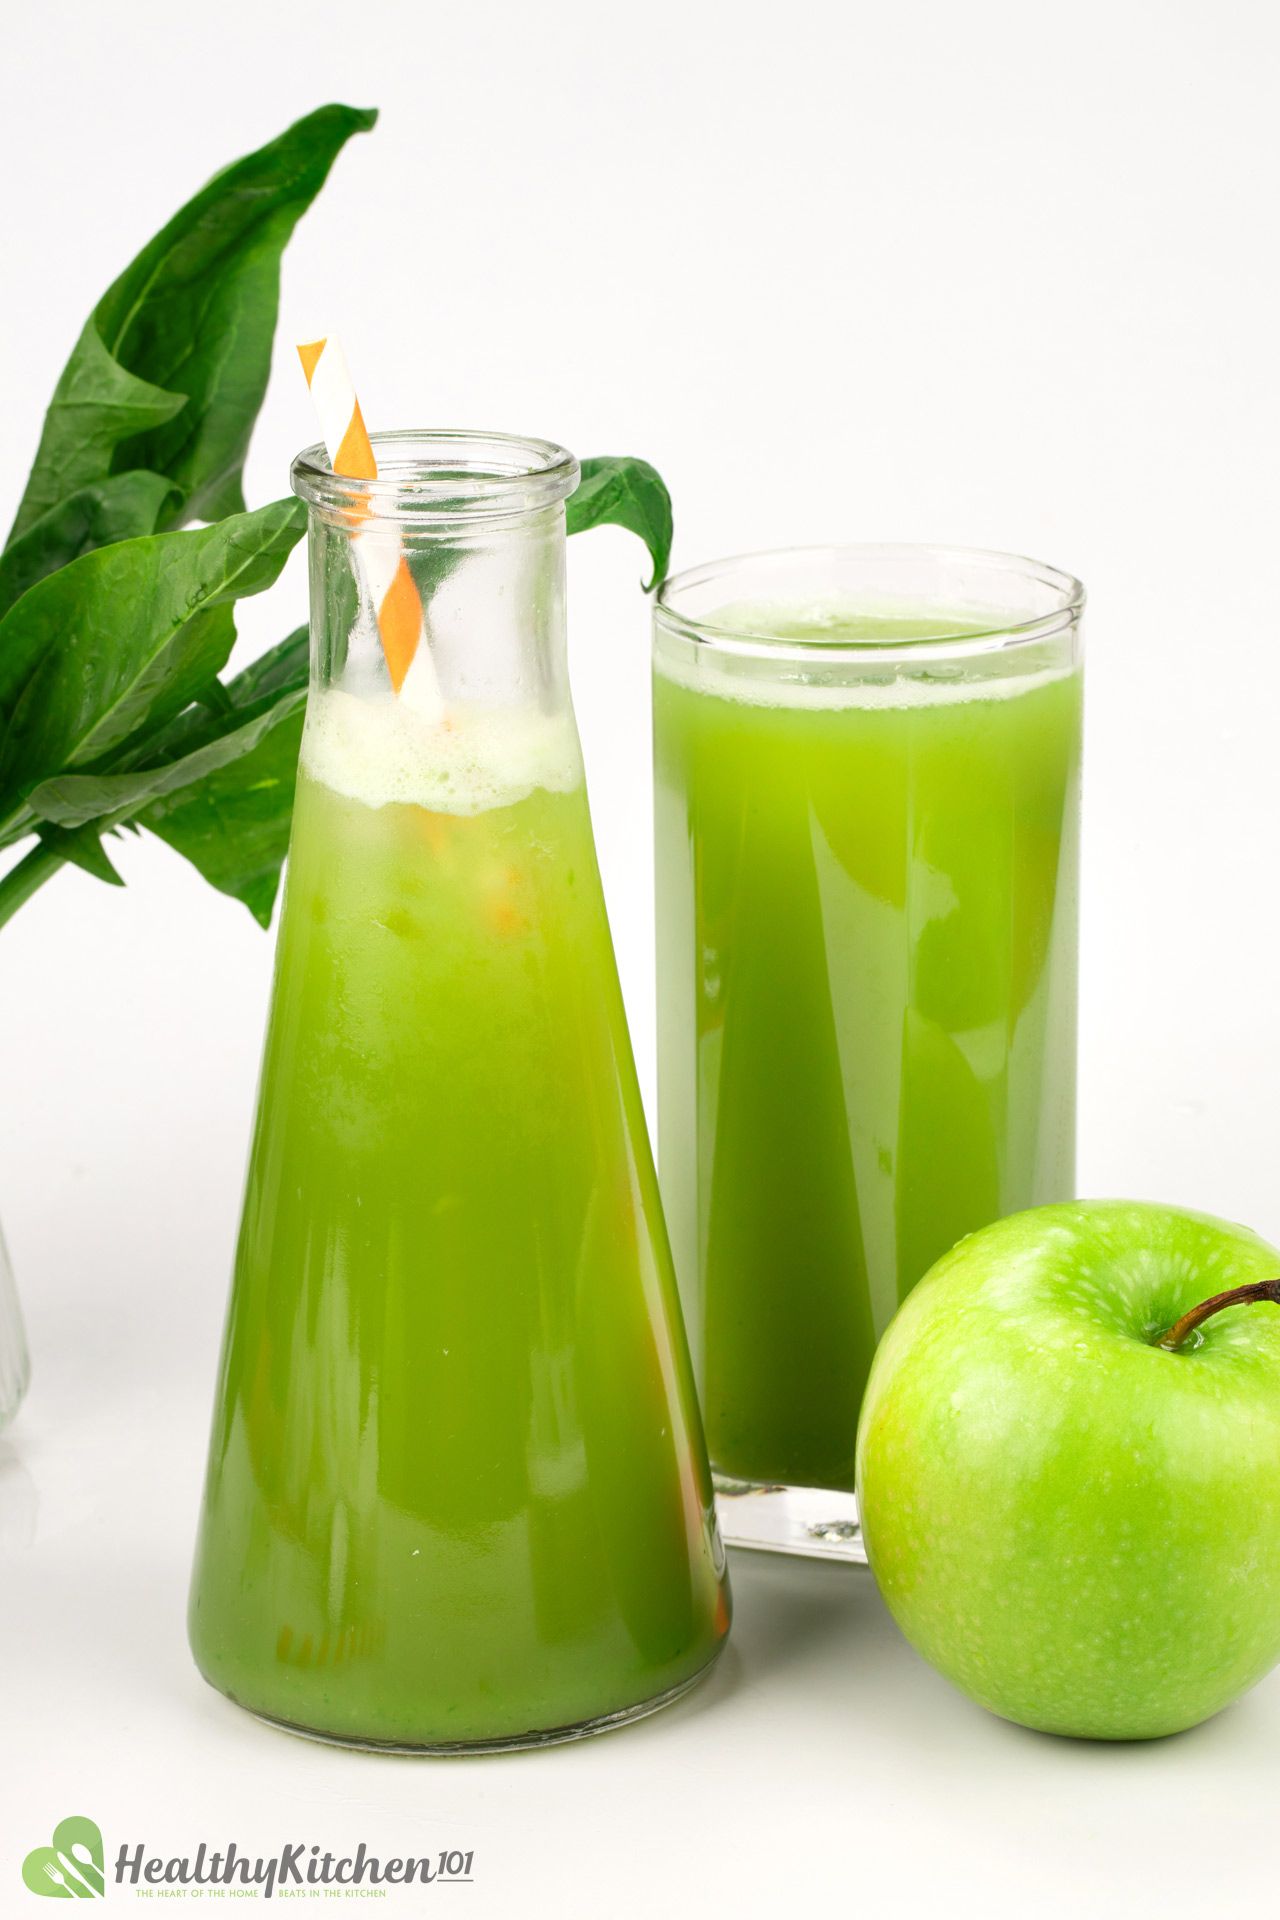 Homemade Green Apple Juice Recipe